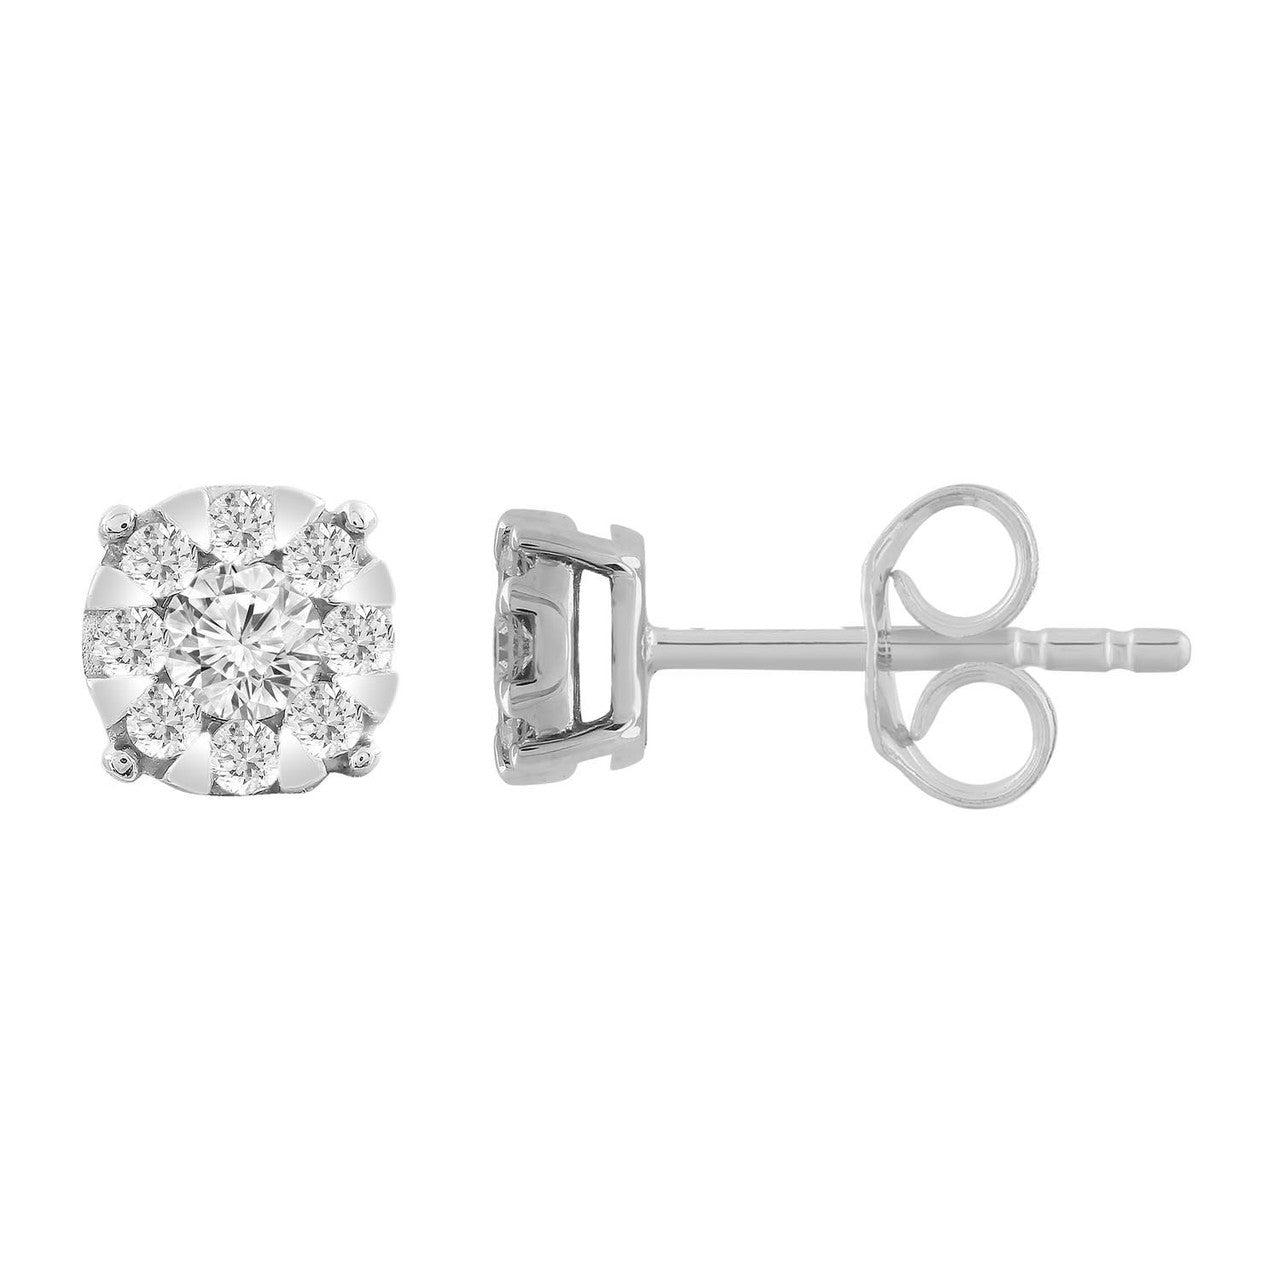 Ice Jewellery Stud Earrings with 0.33ct Diamonds in 9K White Gold - E-14059A-033-W | Ice Jewellery Australia